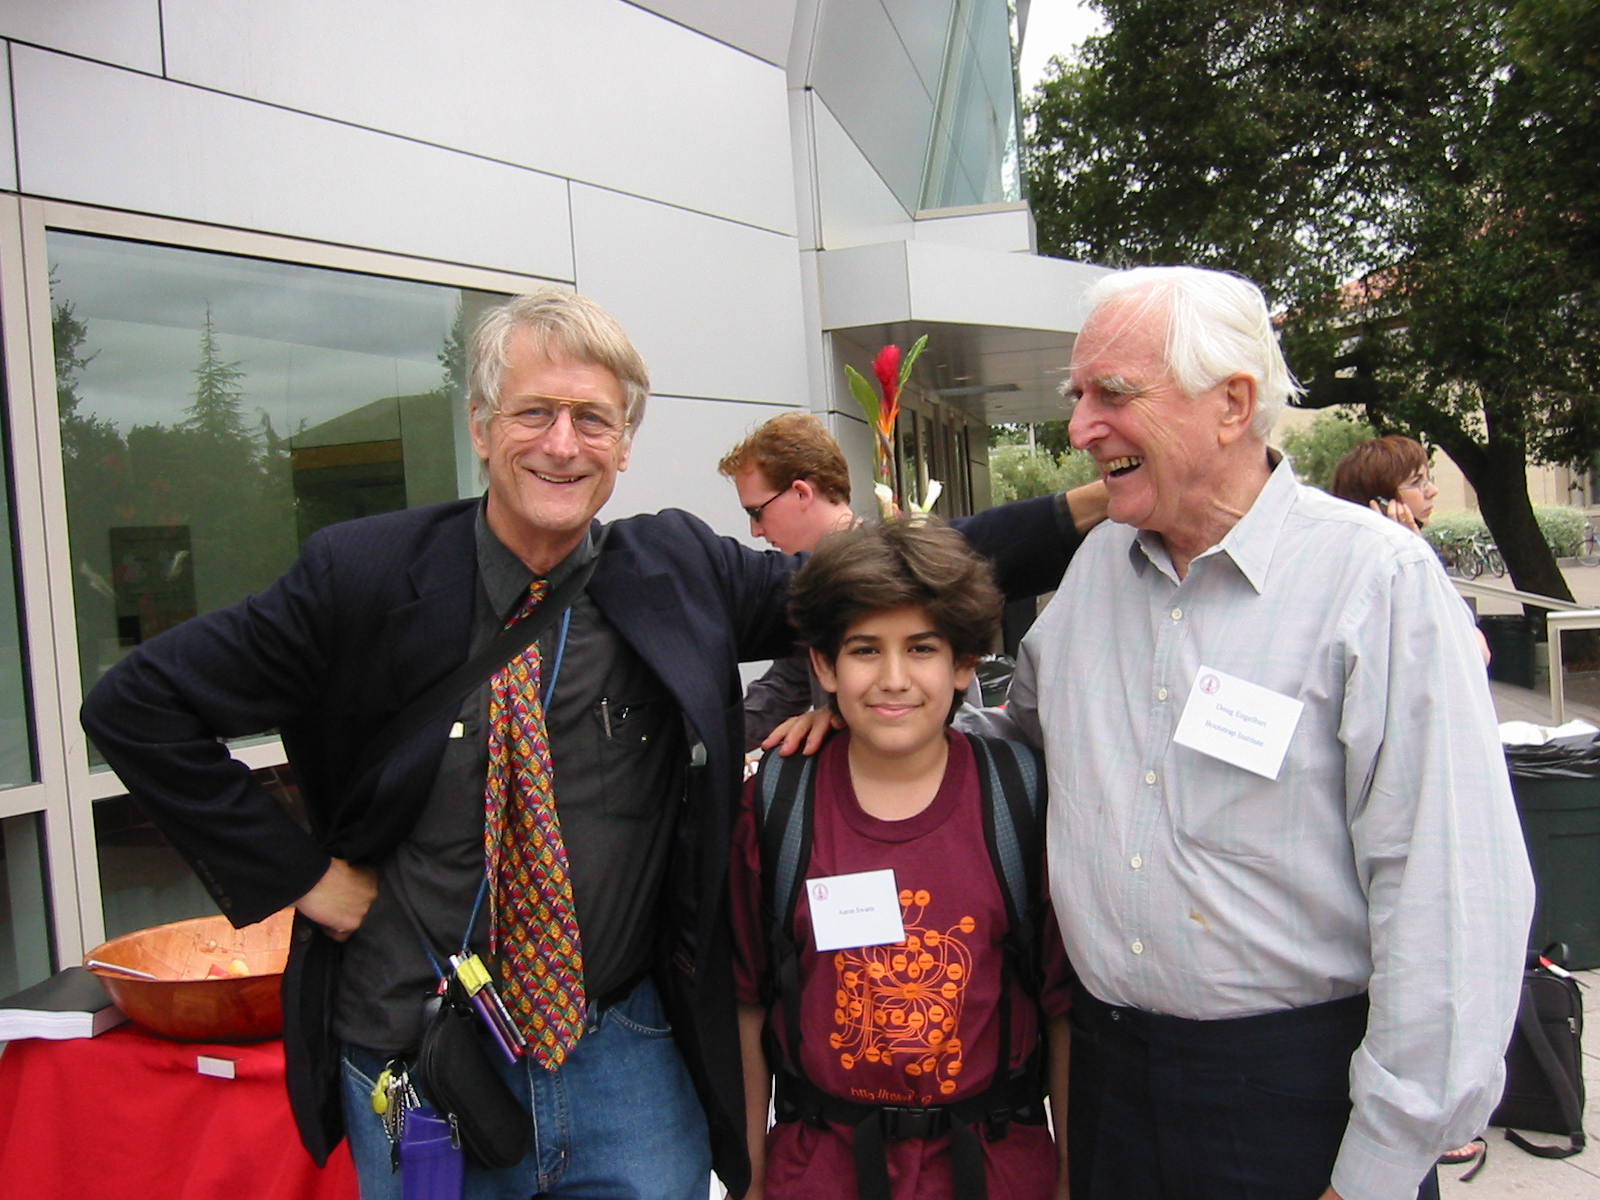 [Ted Nelson, Aaron Swartz, and Doug Engelbart at the 2001 International Semantic Web Working Symposium]